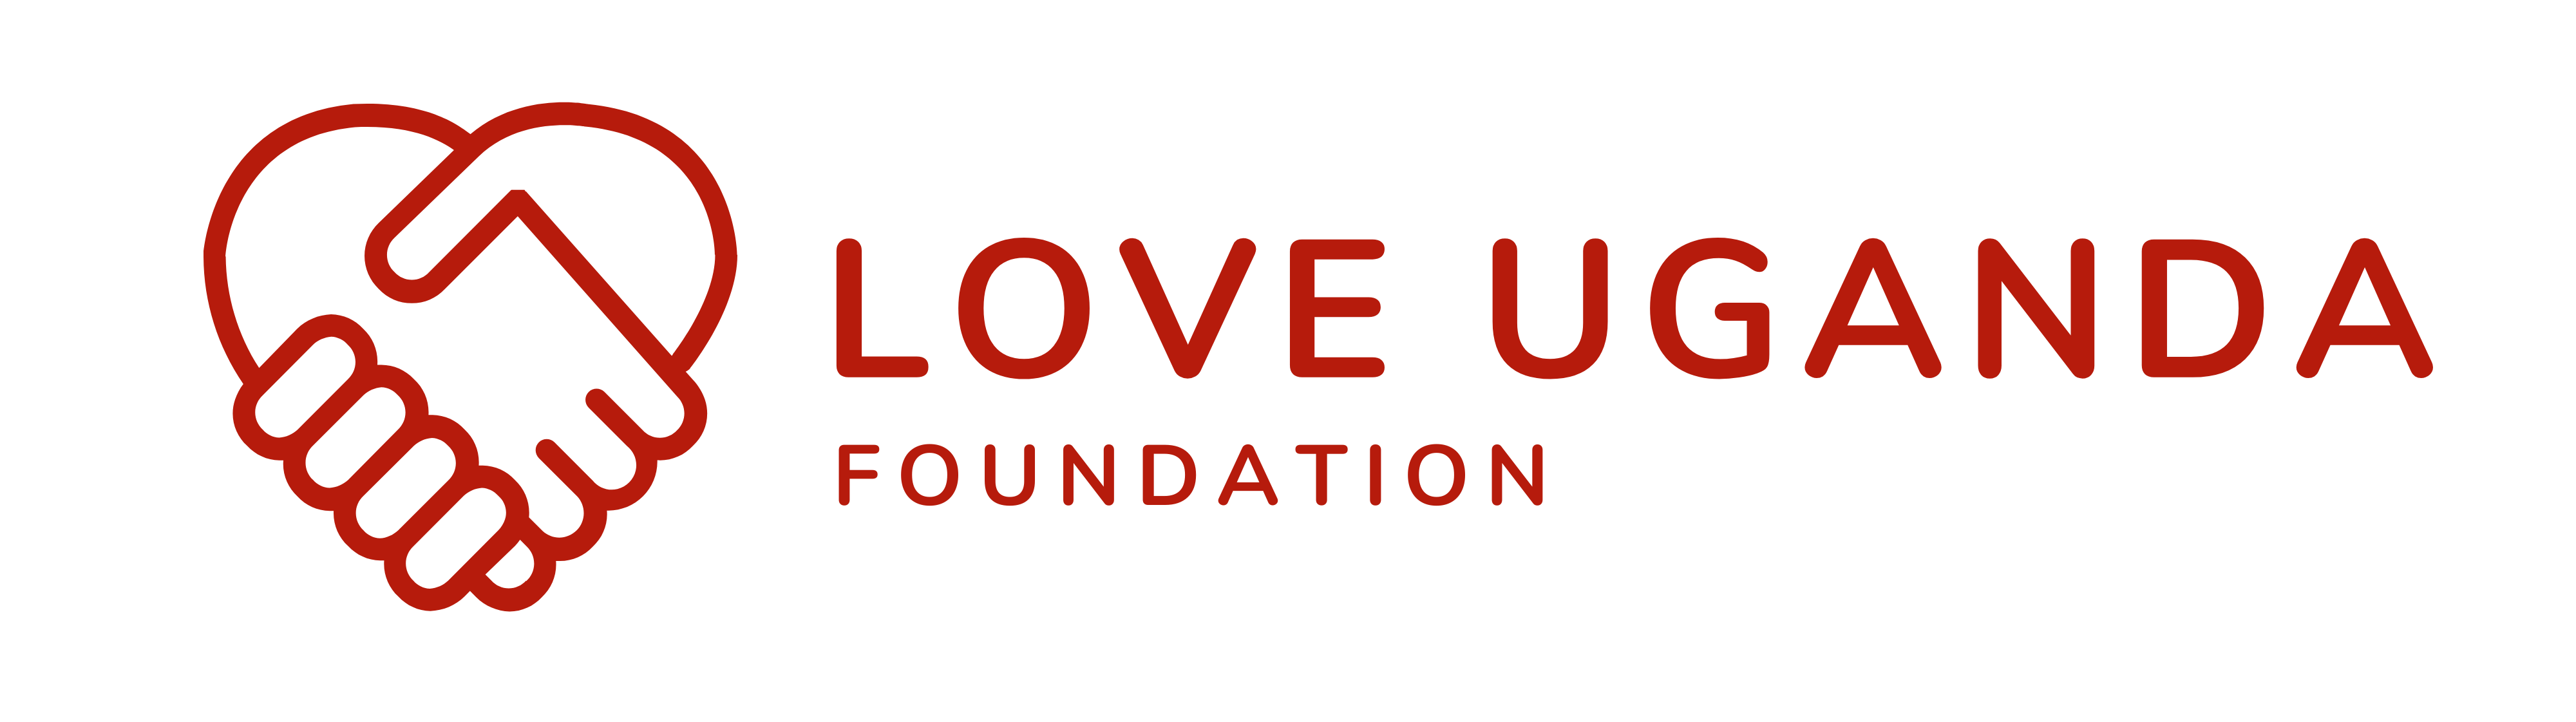 Love Uganda Foundation – Logo1